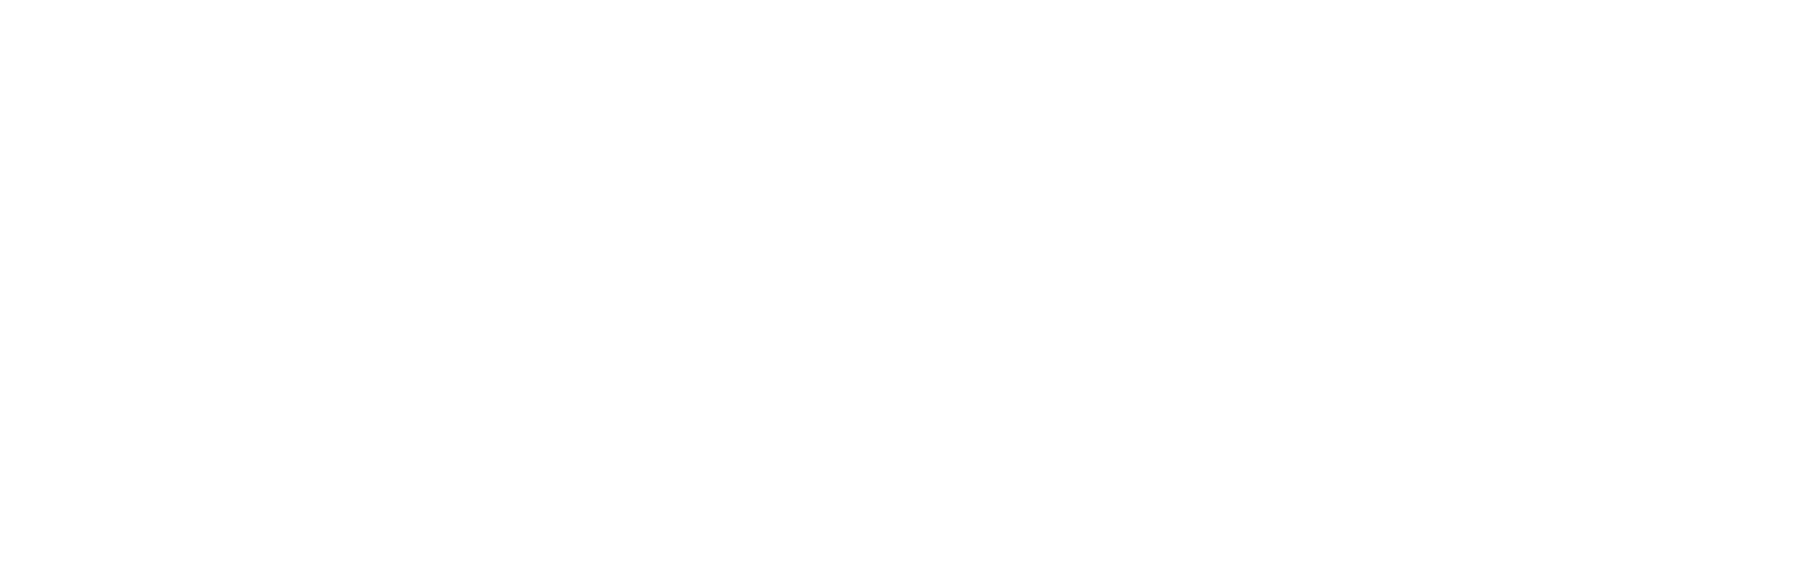 Accenture Logo White